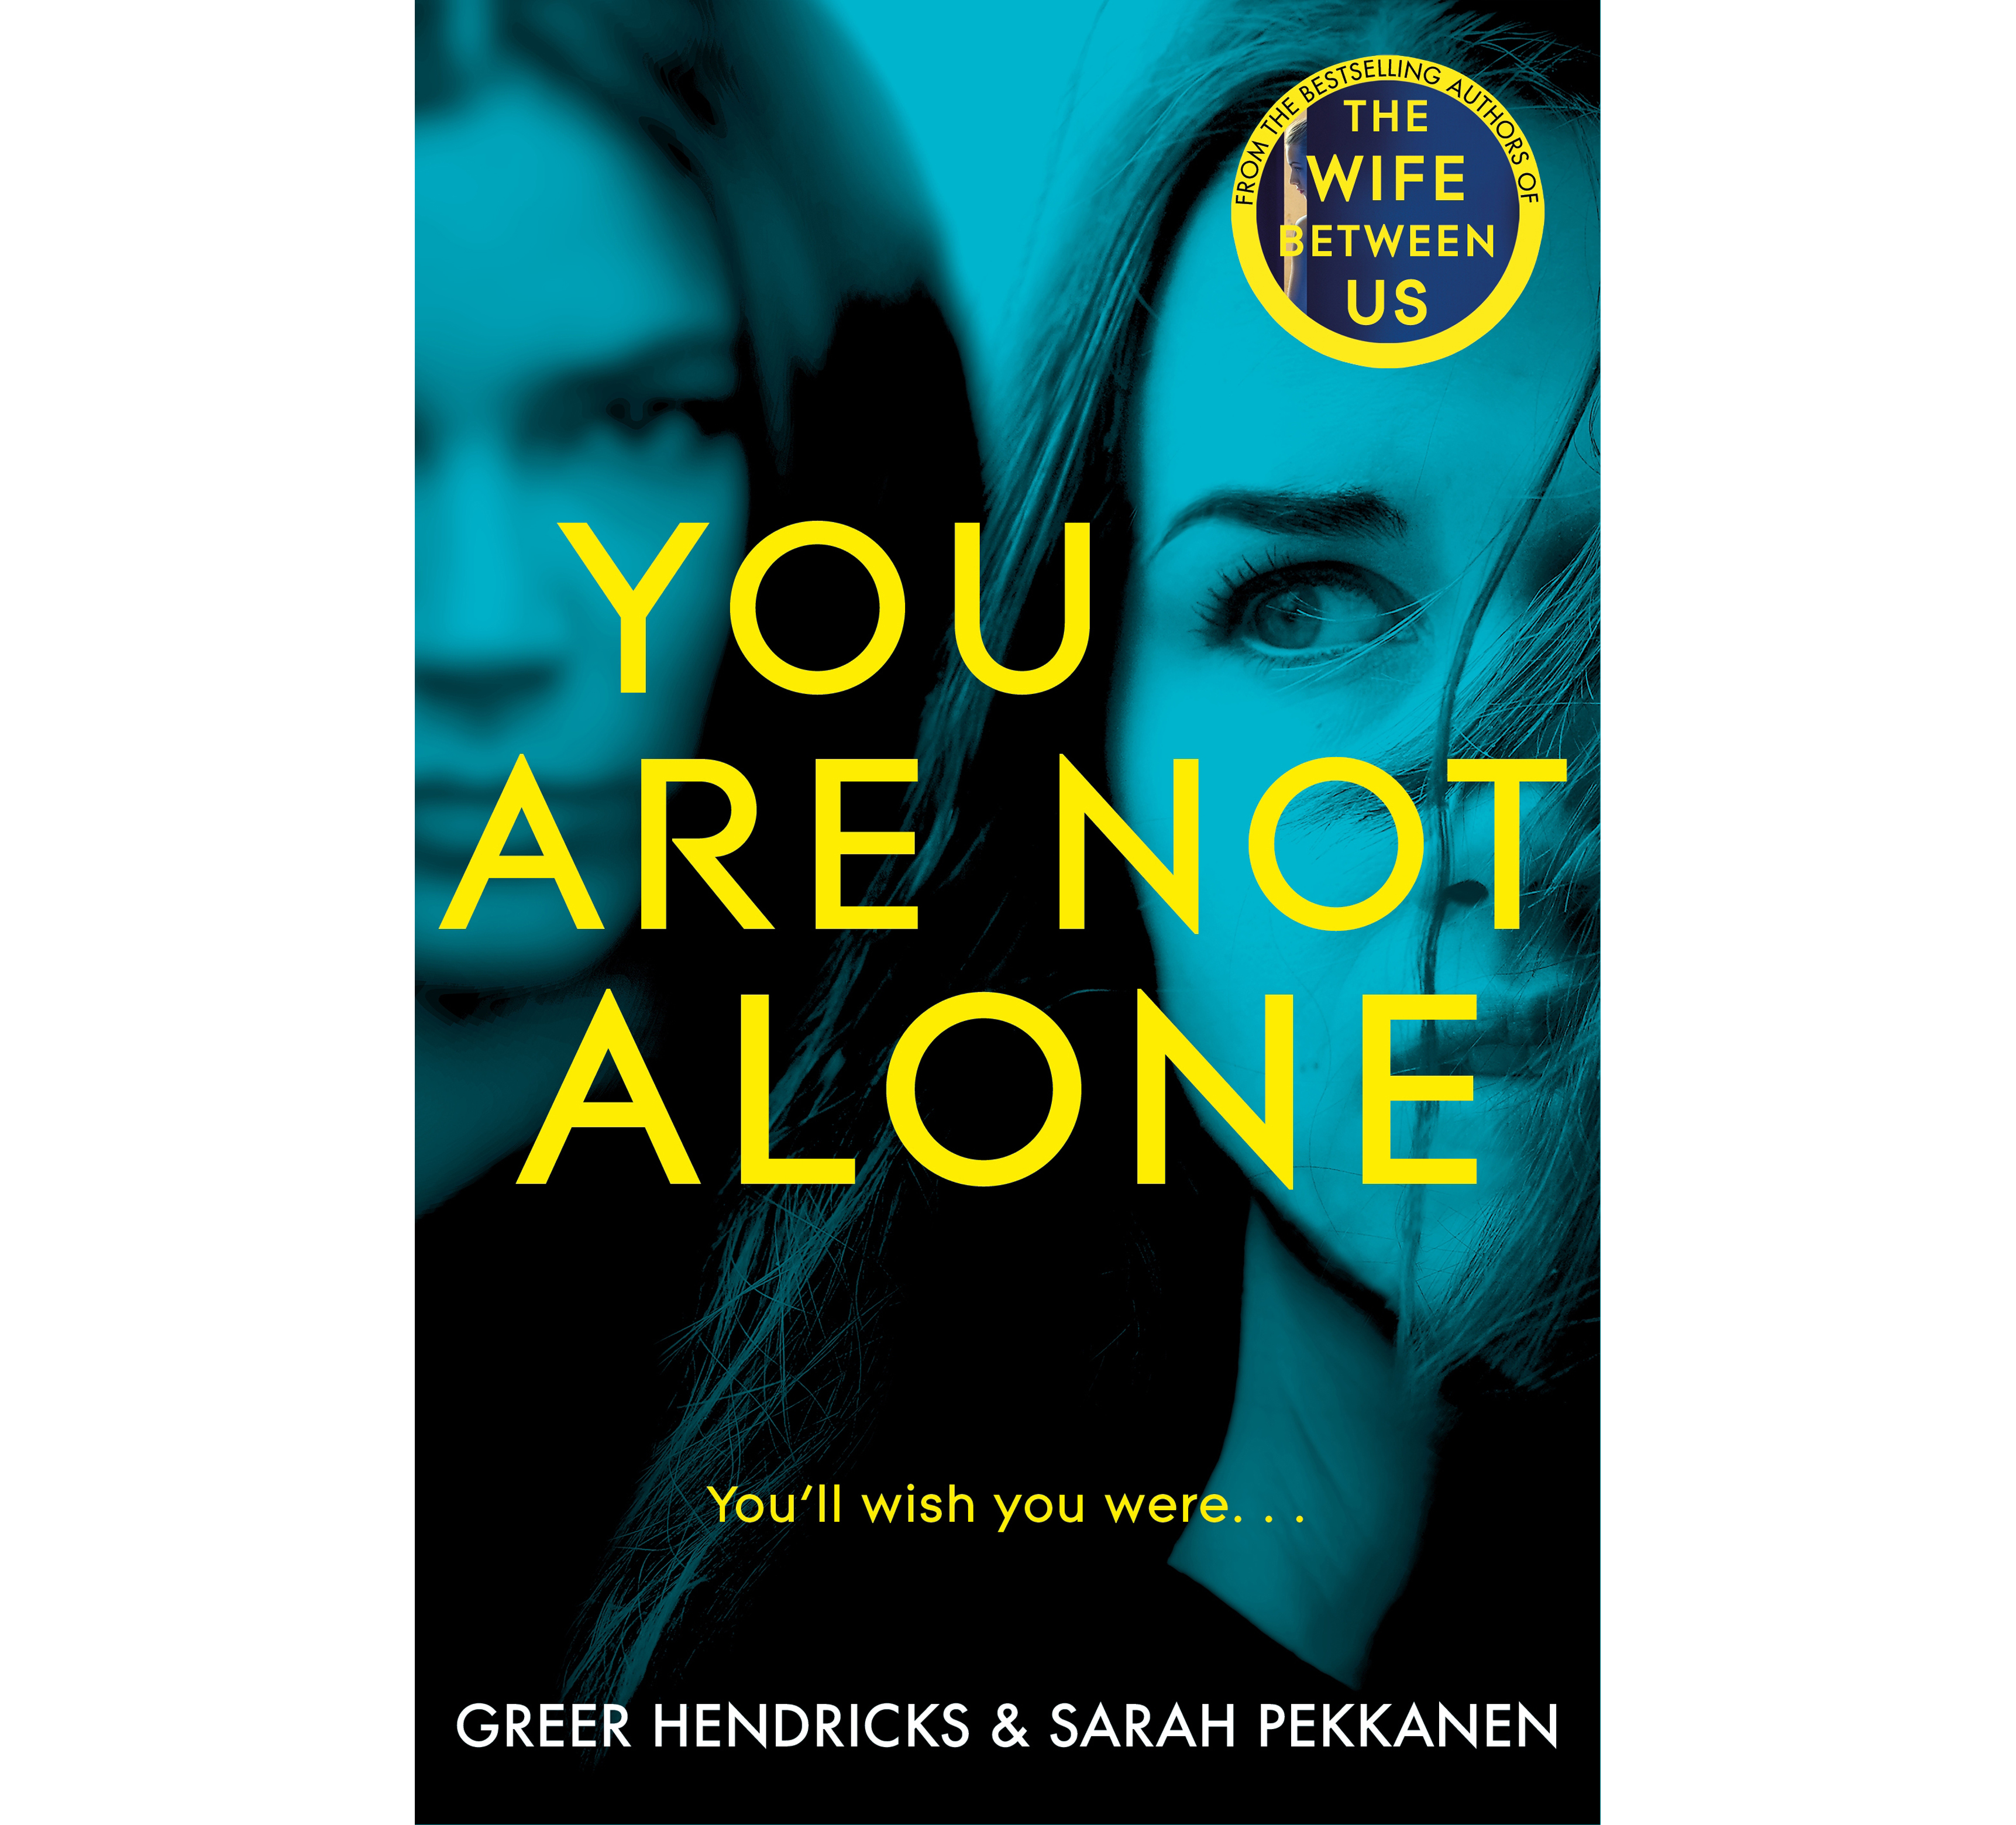 You Are Not Alone by Greer Hendricks and Sarah Pekkanen (Macmillan/PA)